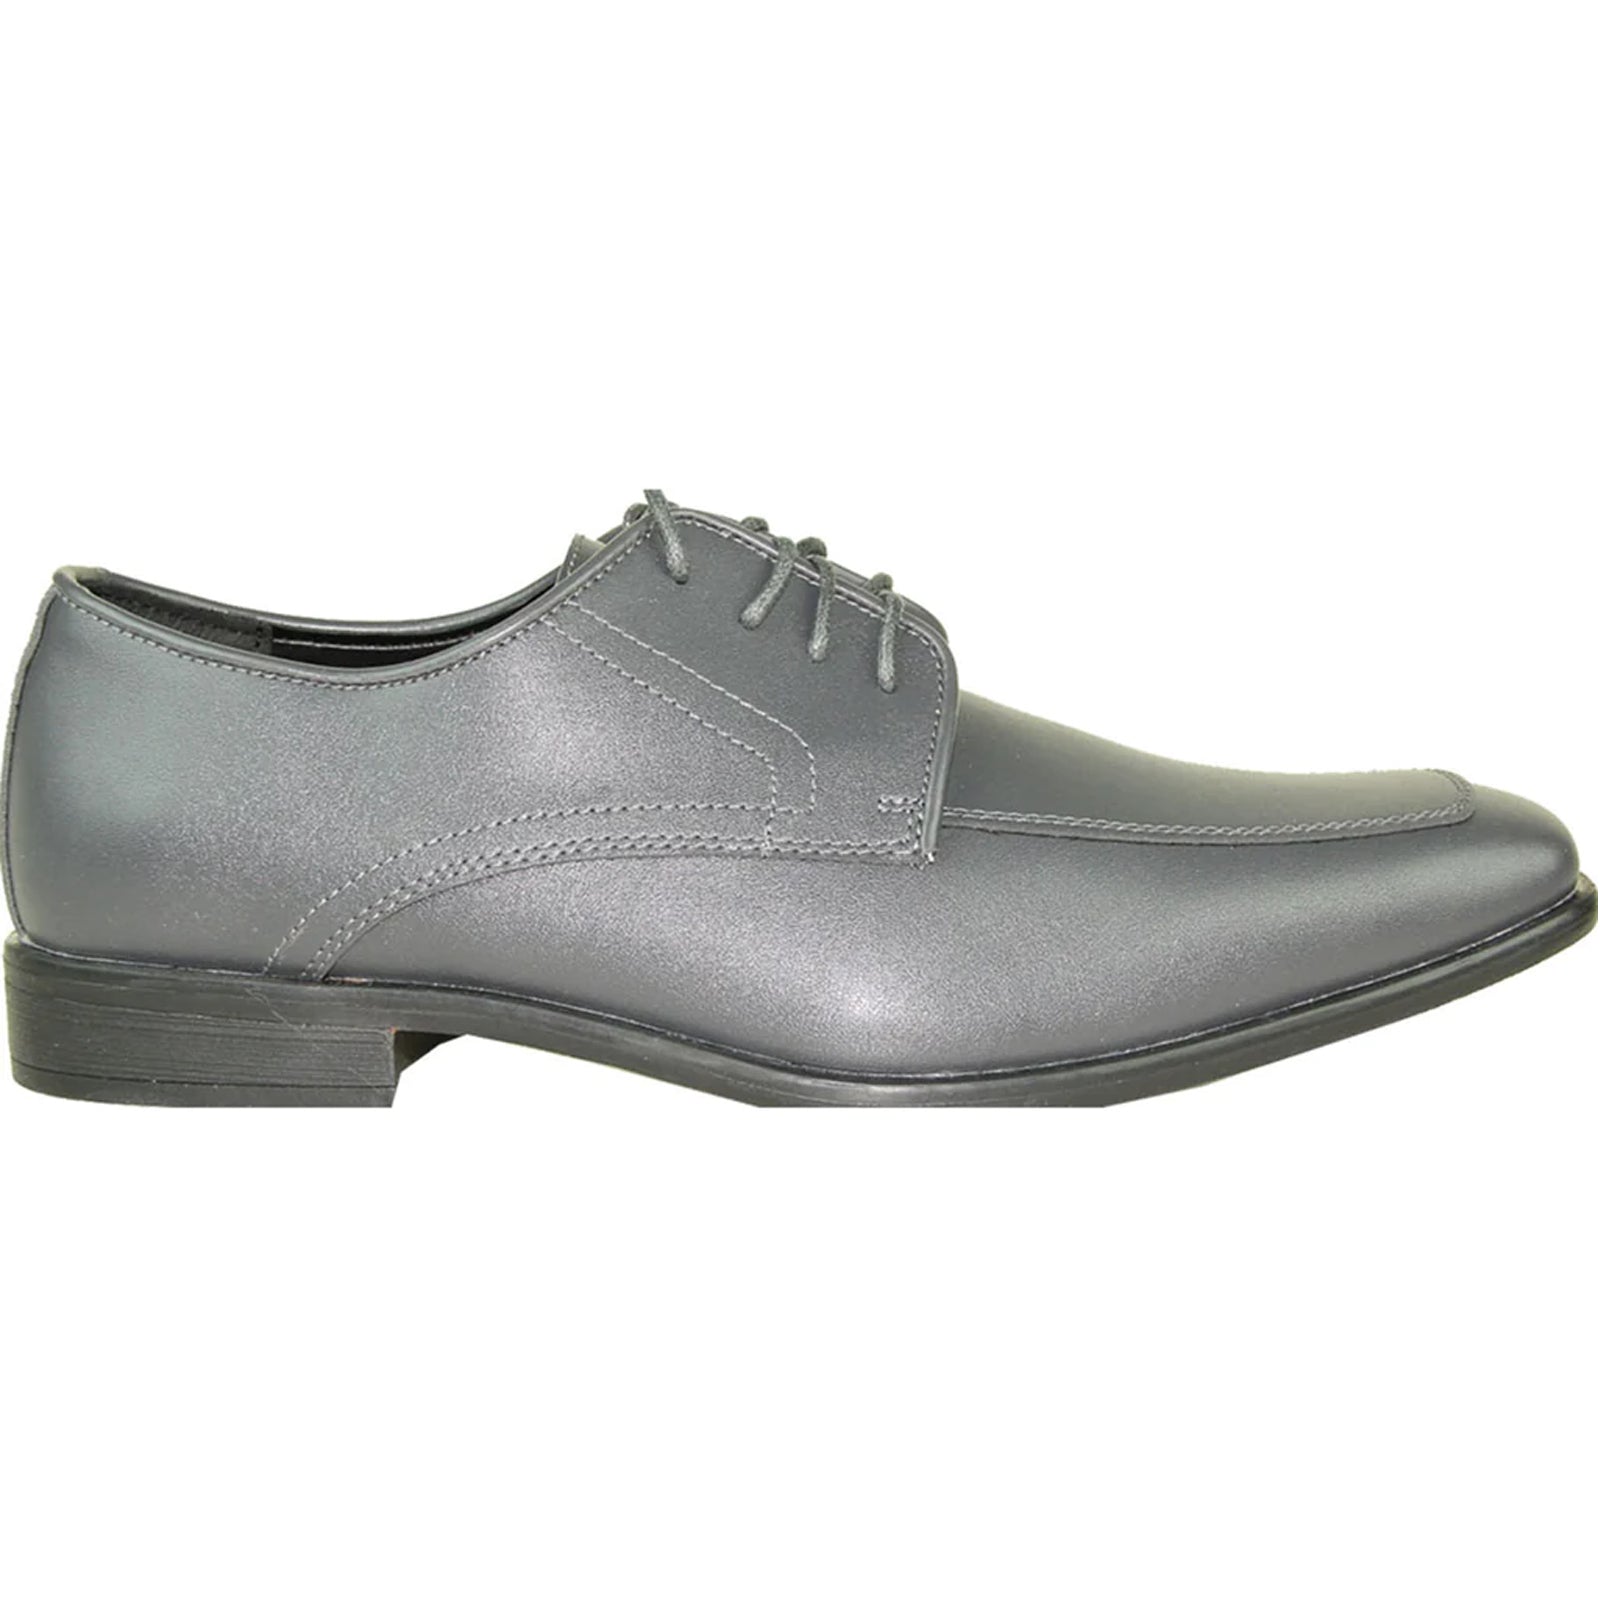 "Light Grey Oxford Formal Men's Dress Shoe - Lace Up Tuxedo Style"